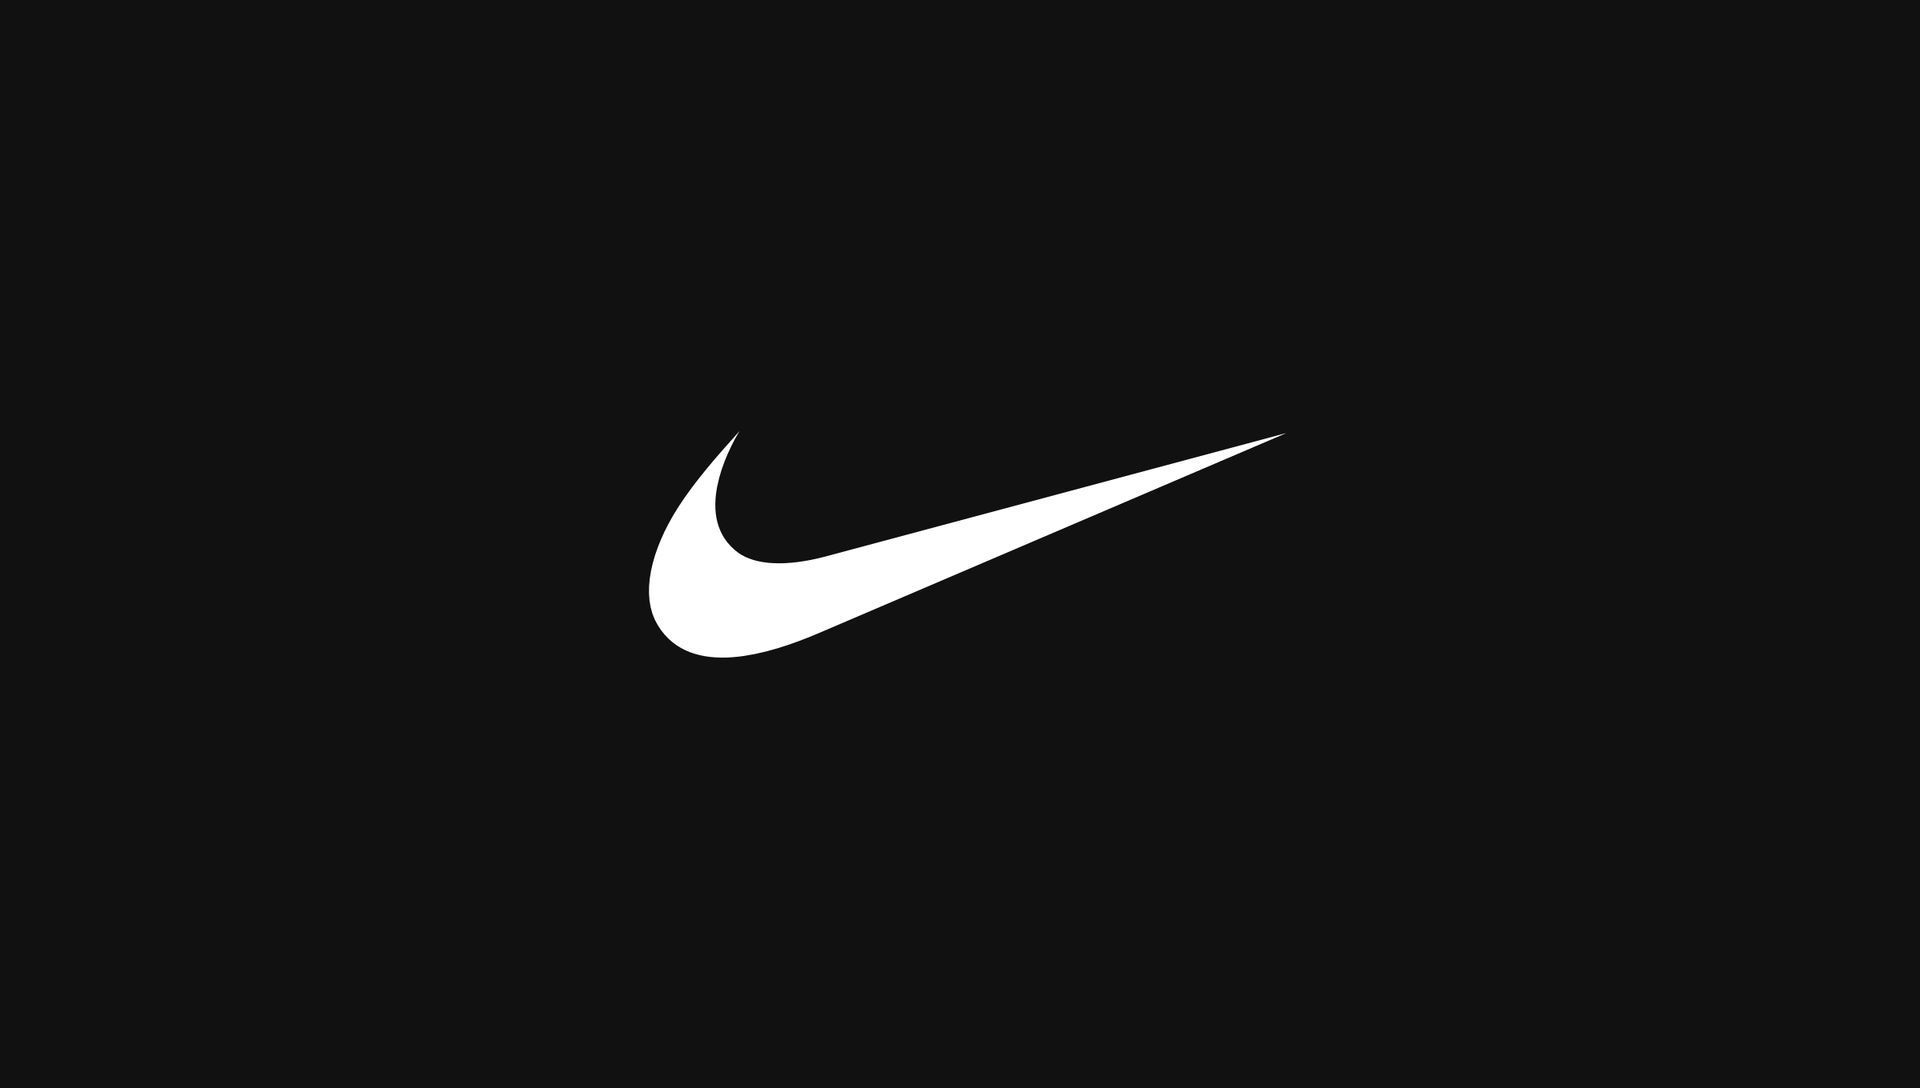 Tabla de de calzado hombre. Nike